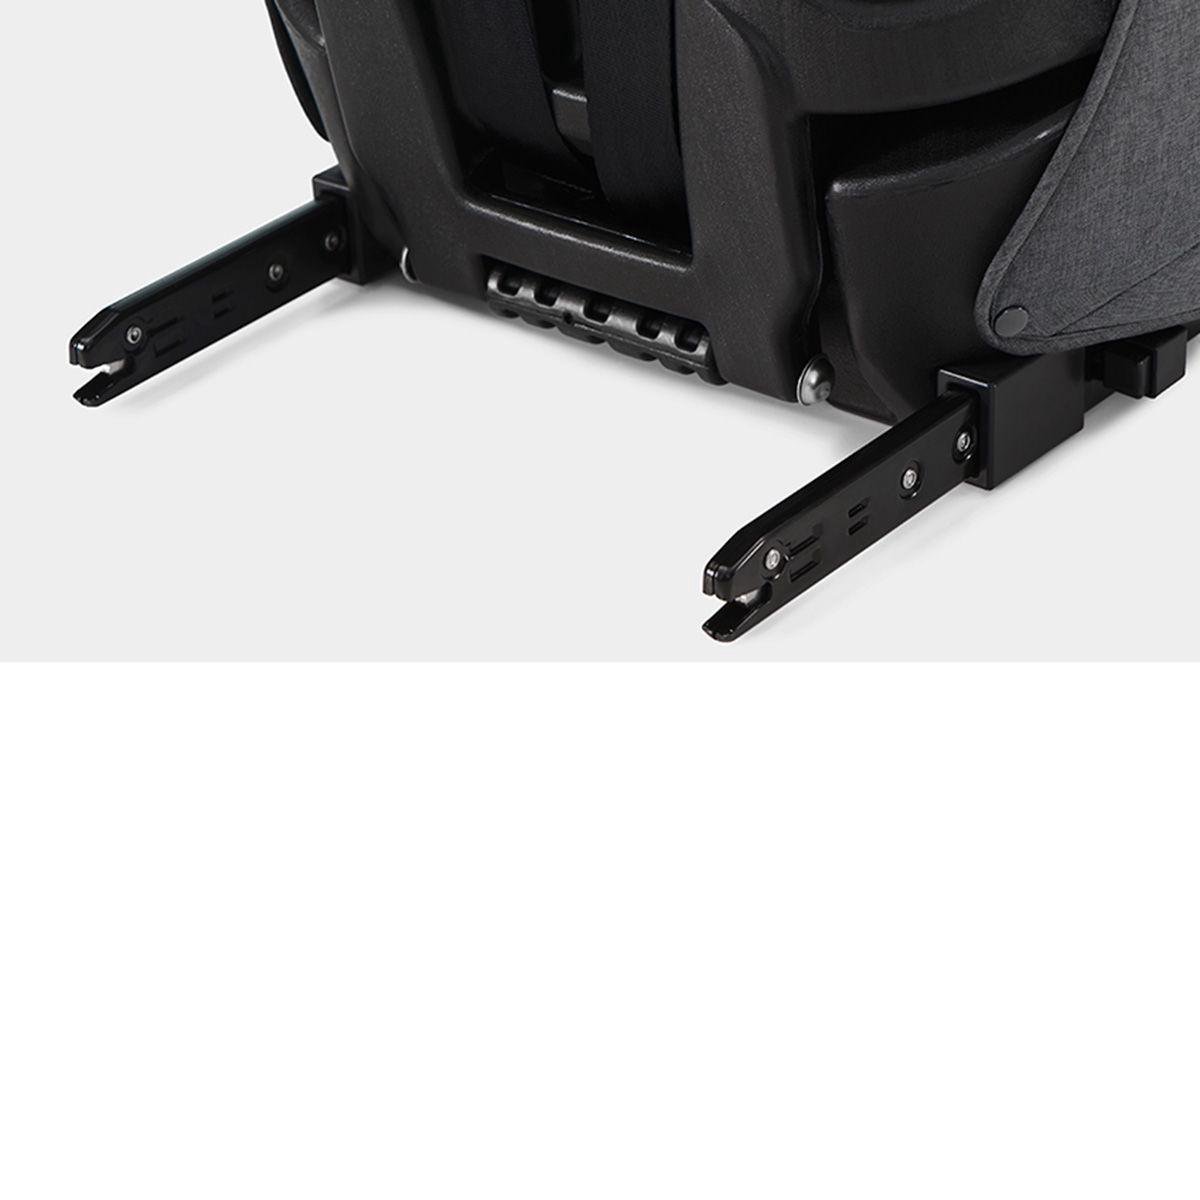 Kinderkraft Autostoel Safetyfix - - Zwart